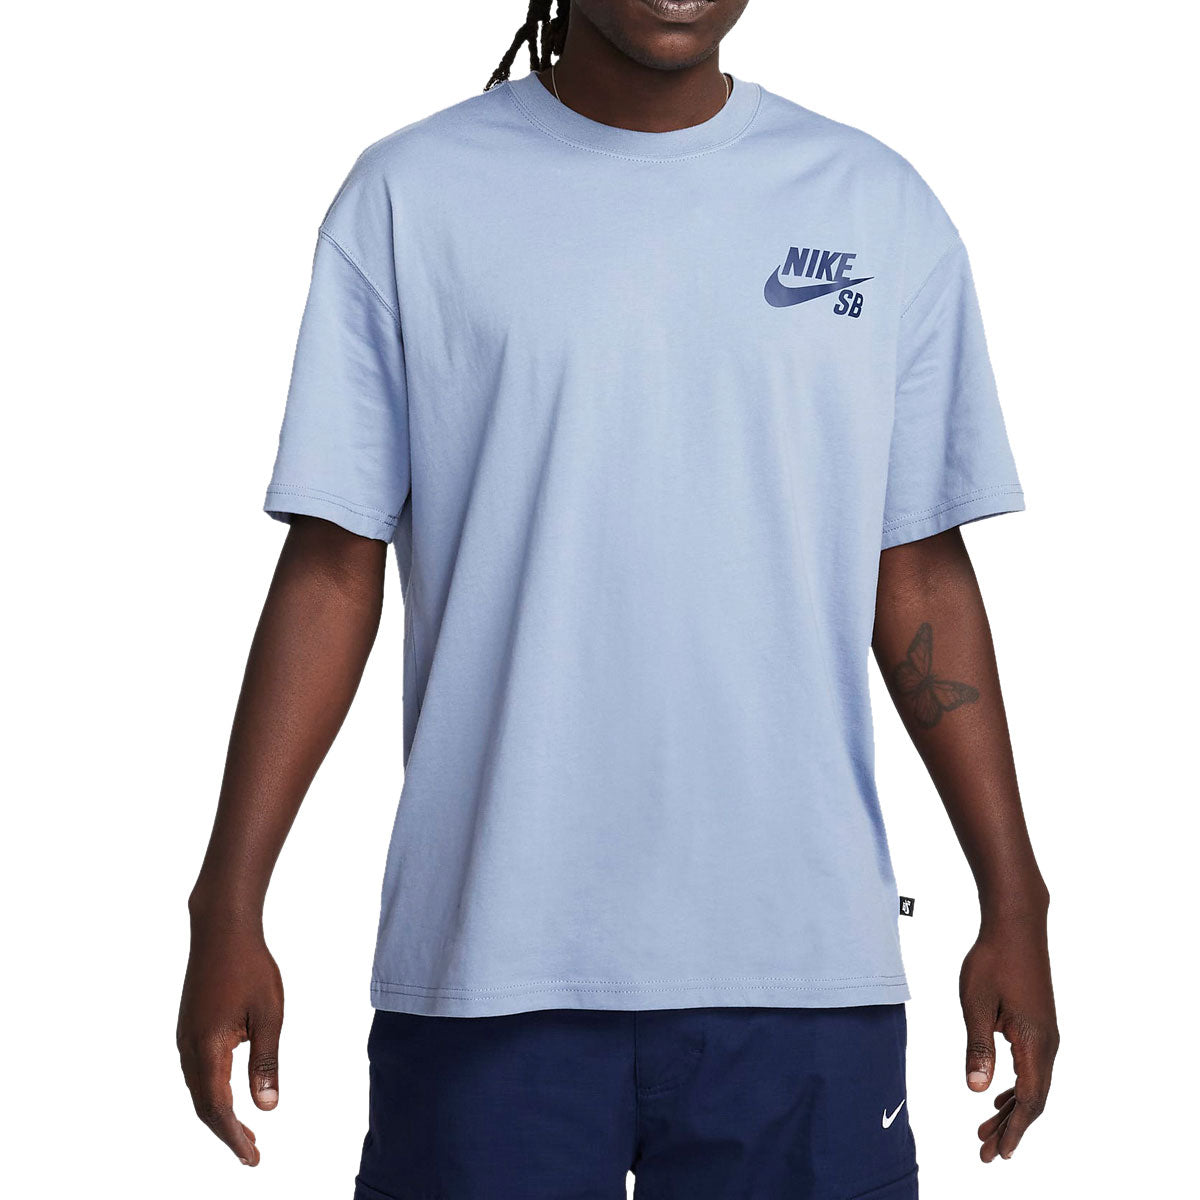 Nike SB New Logo T-Shirt - Ashen Slate image 2